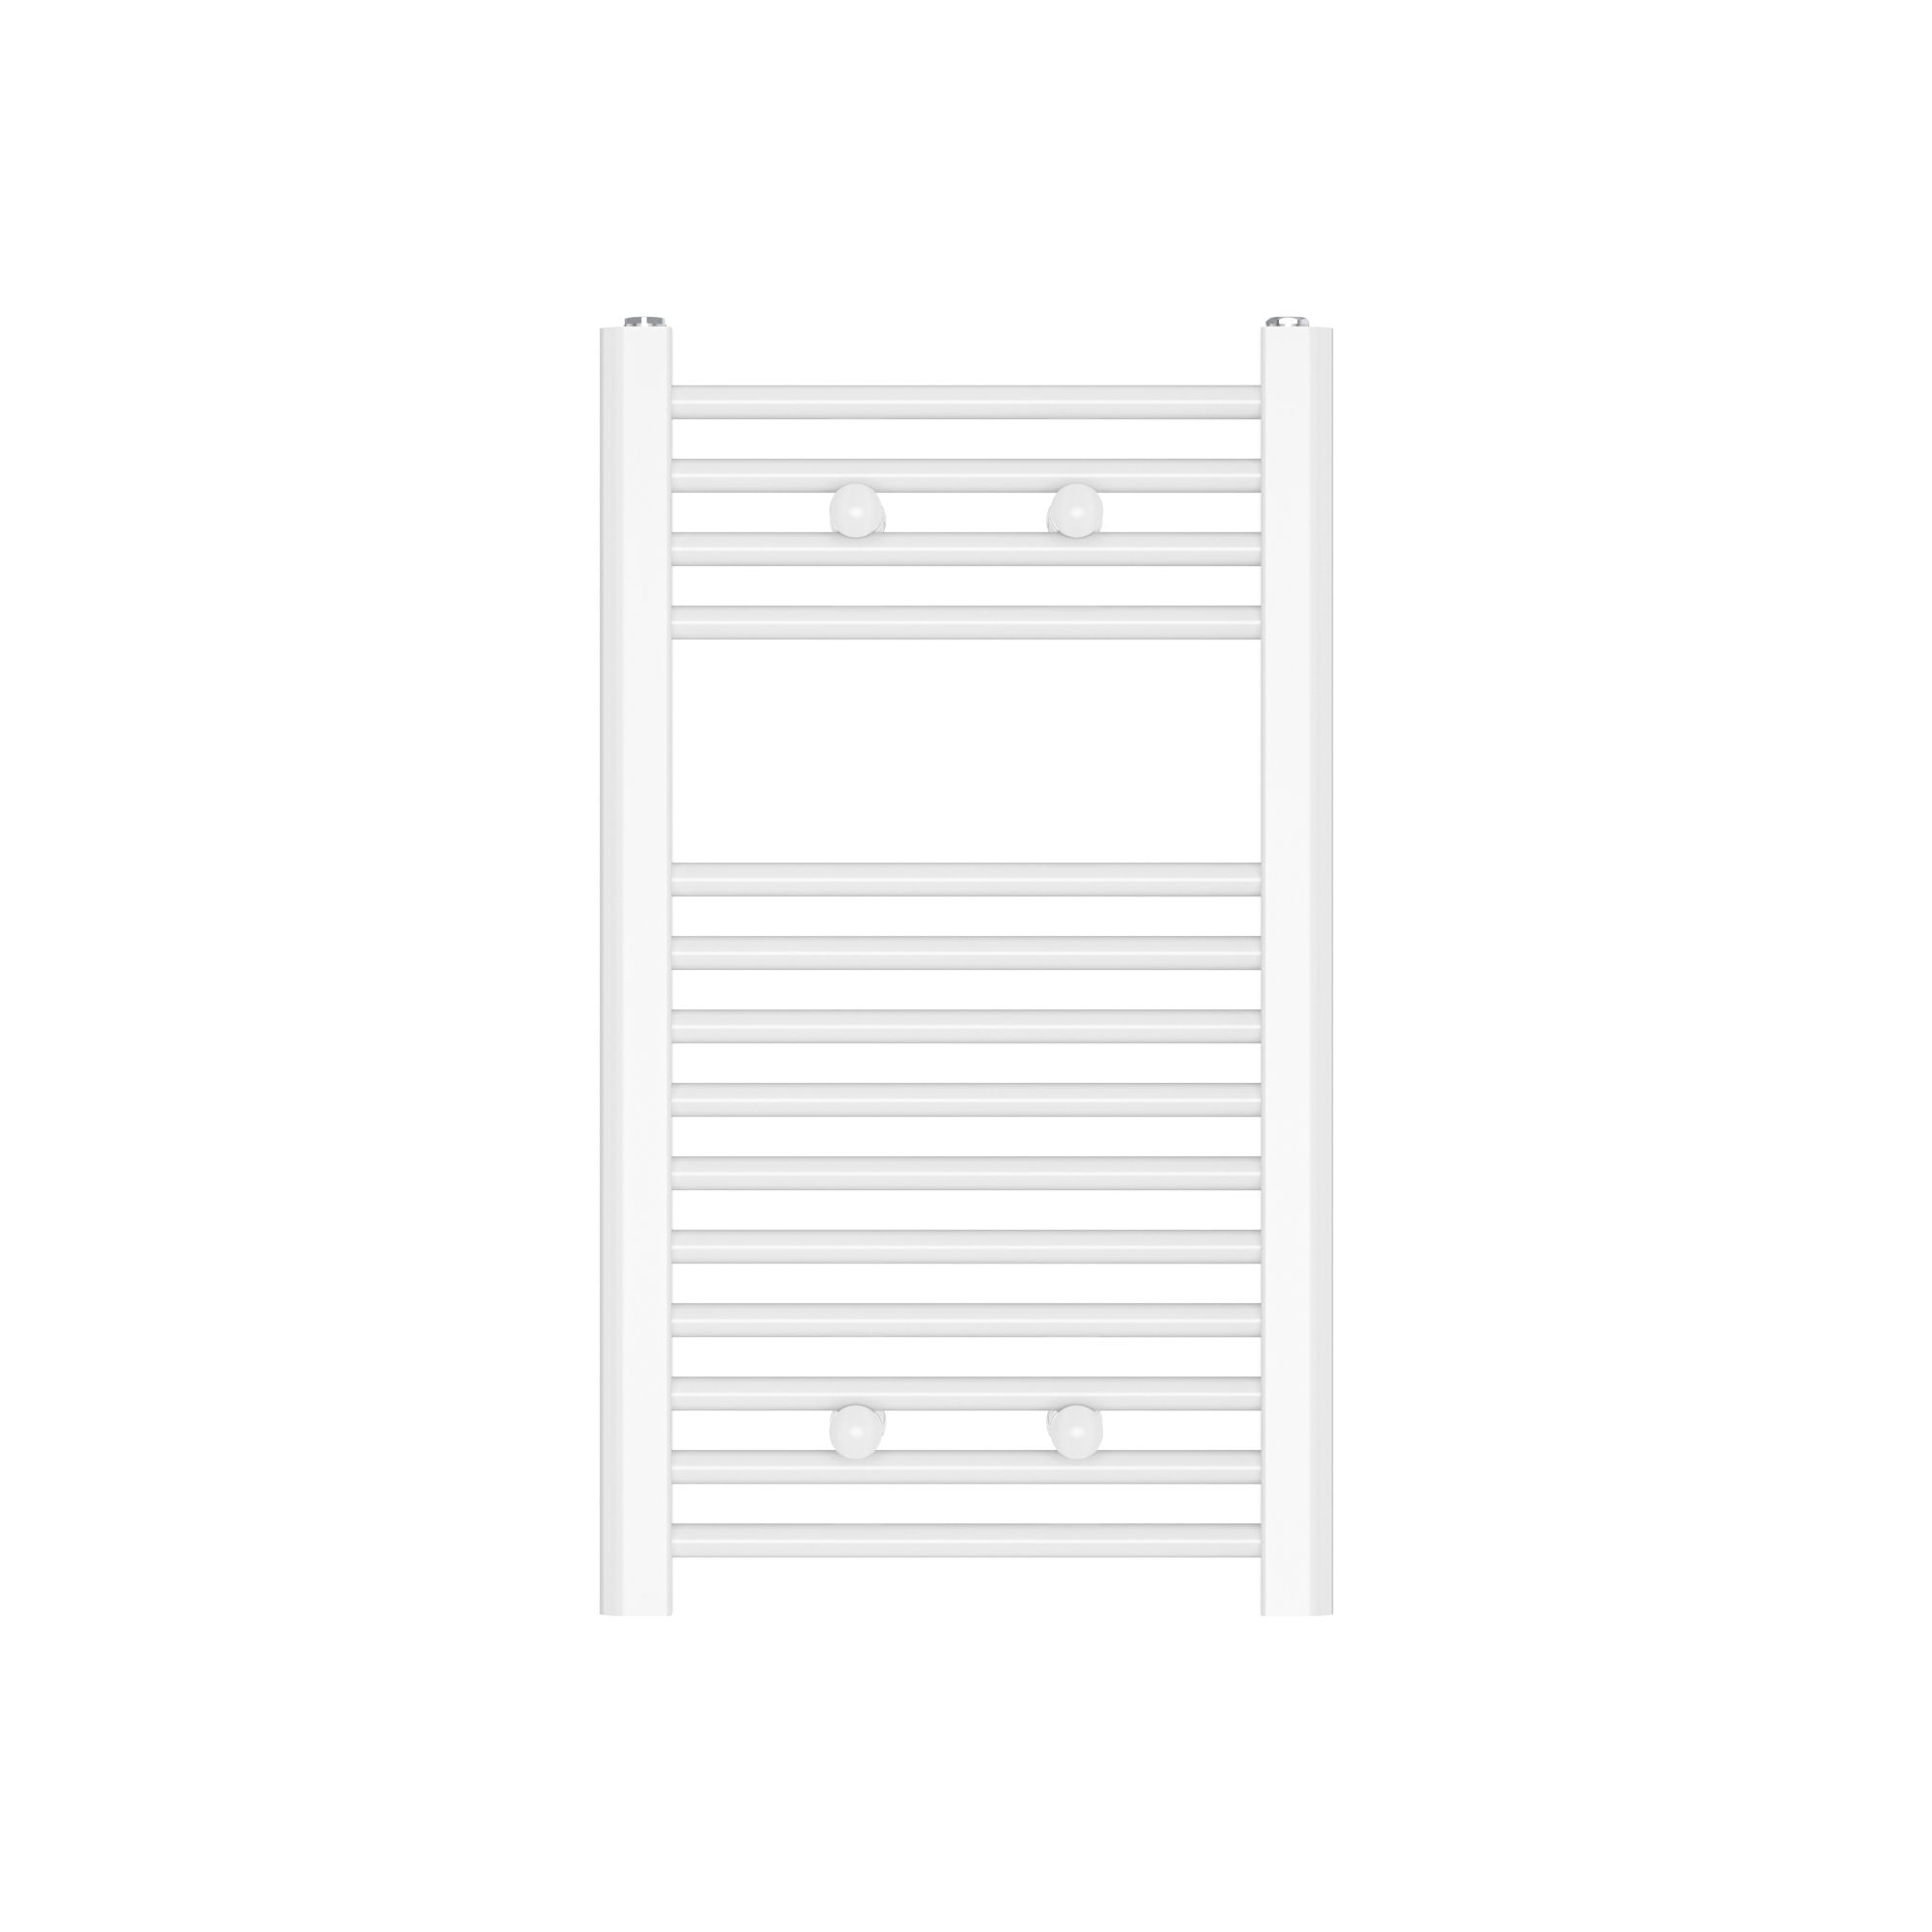 Flomasta Flat, White Vertical Towel radiator (W)400mm x (H)700mm